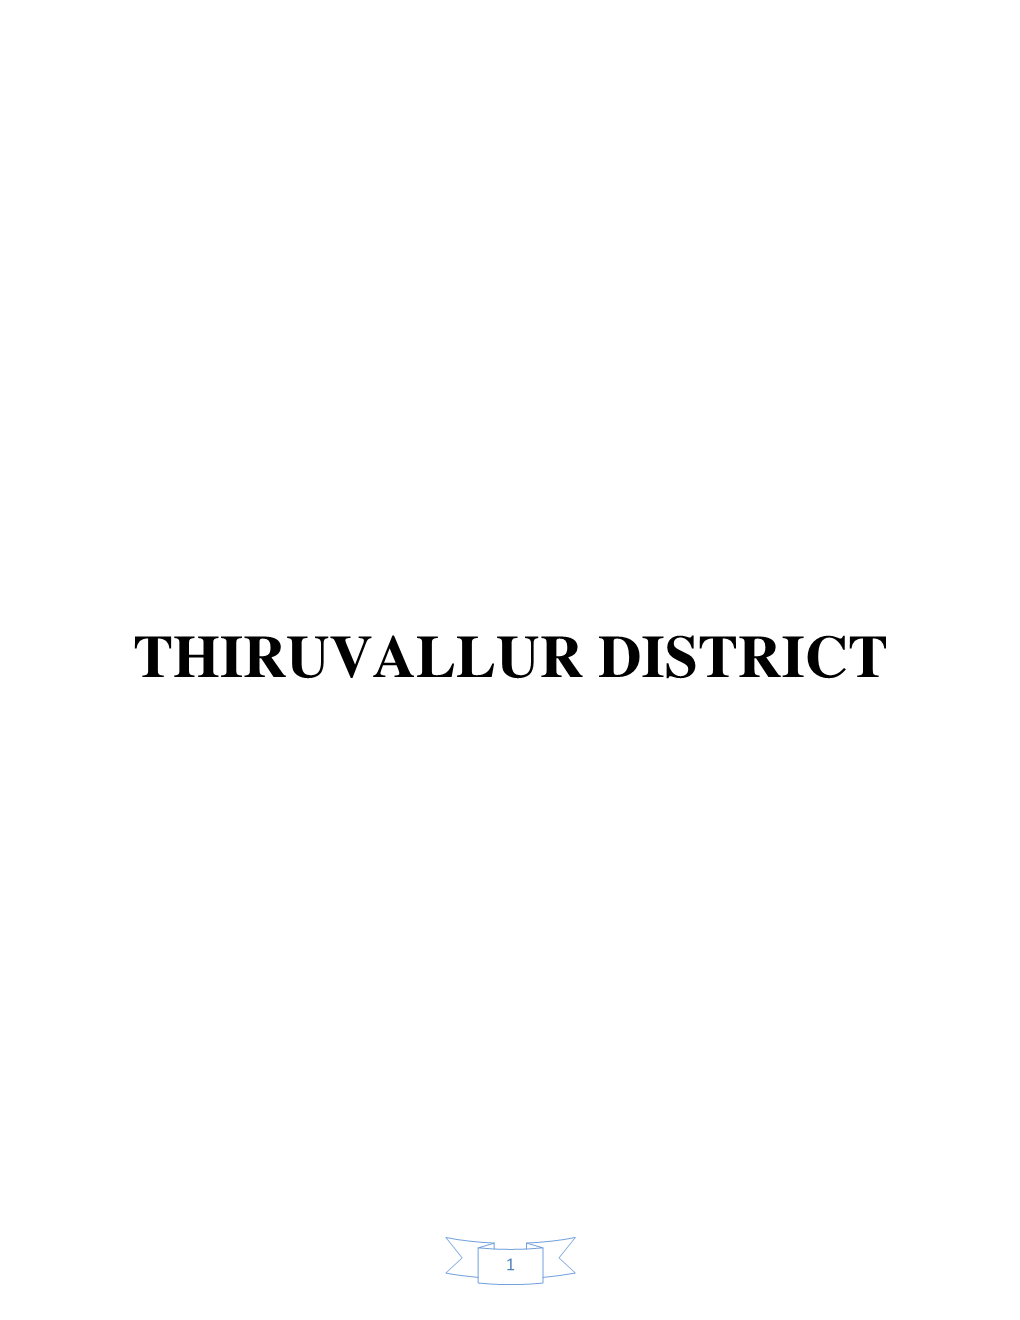 Thiruvallur District